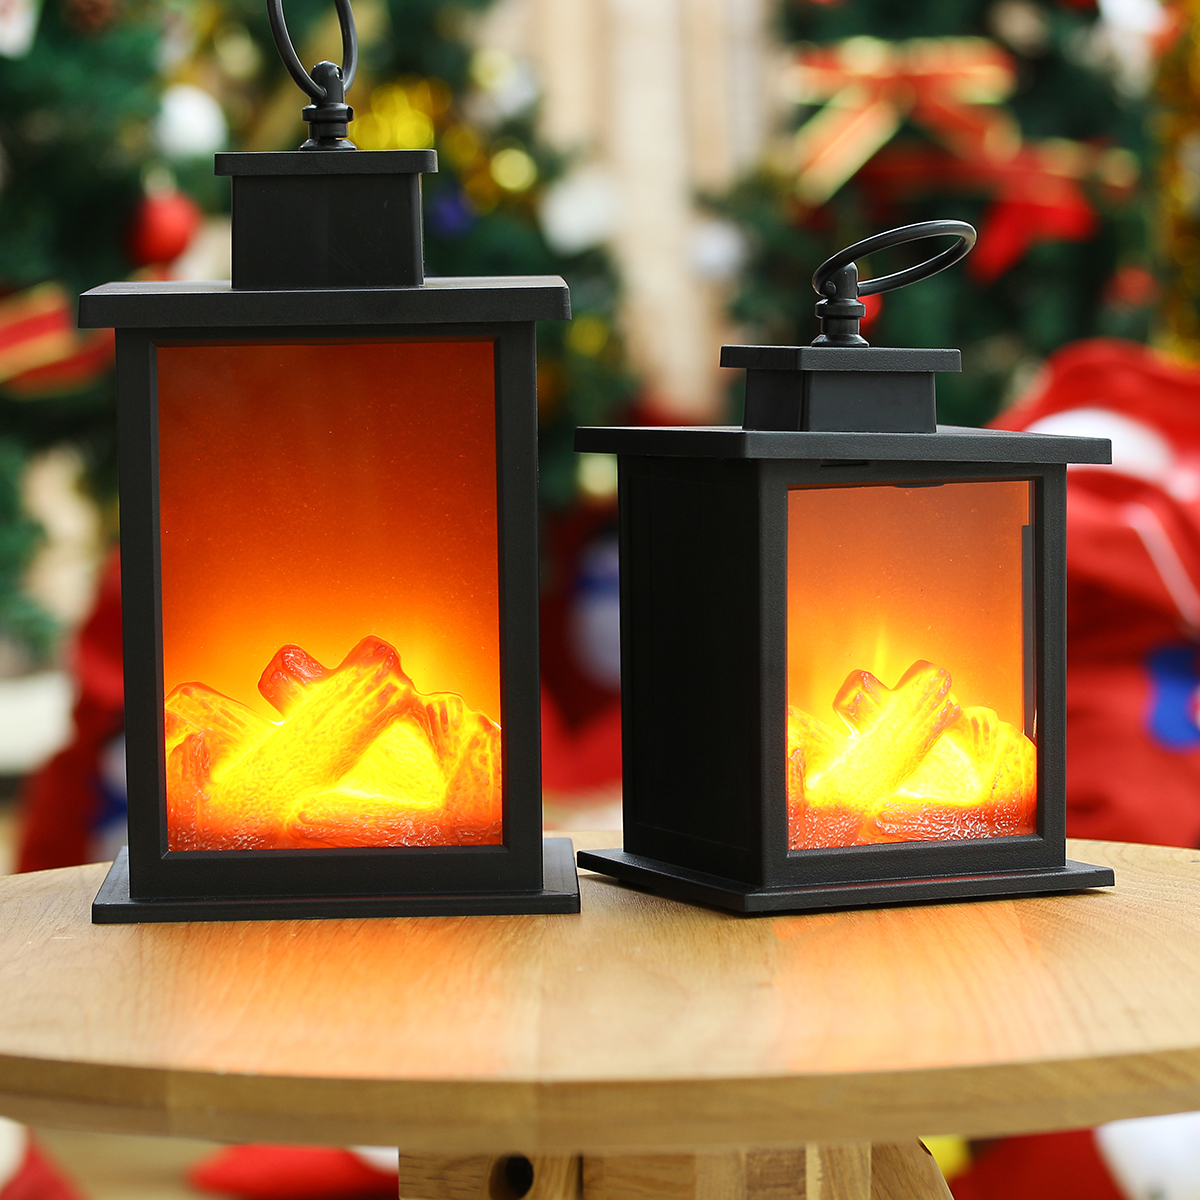 LED-Fireplace-Lantern-Flameless-Light-Fire-Effect-Vintage-Battery-Power-Lamp-HOT-1697164-3